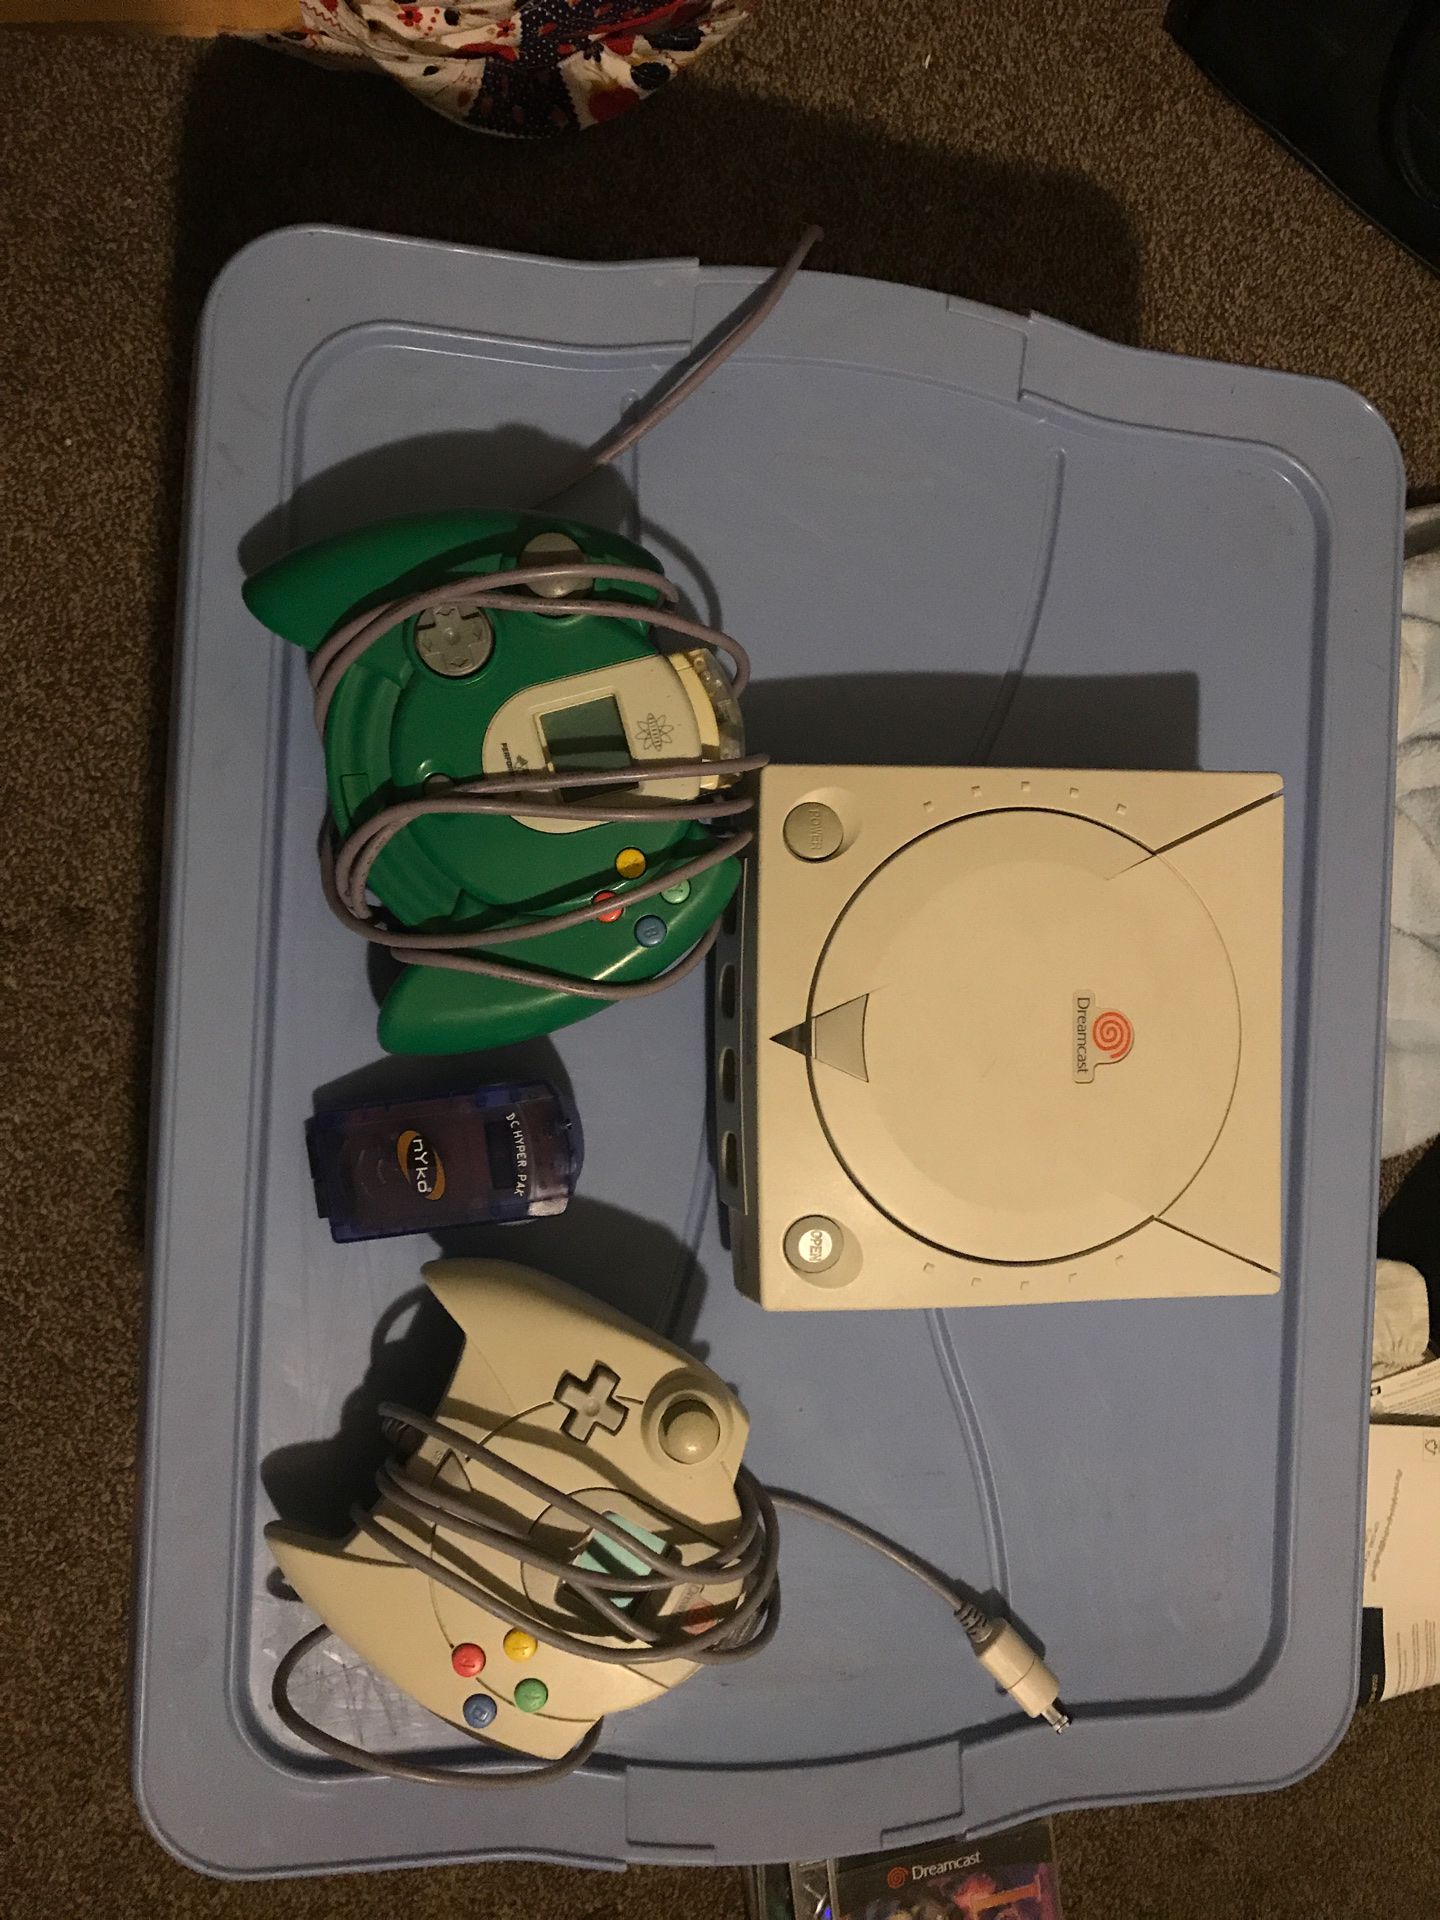 Sega Dreamcast with games